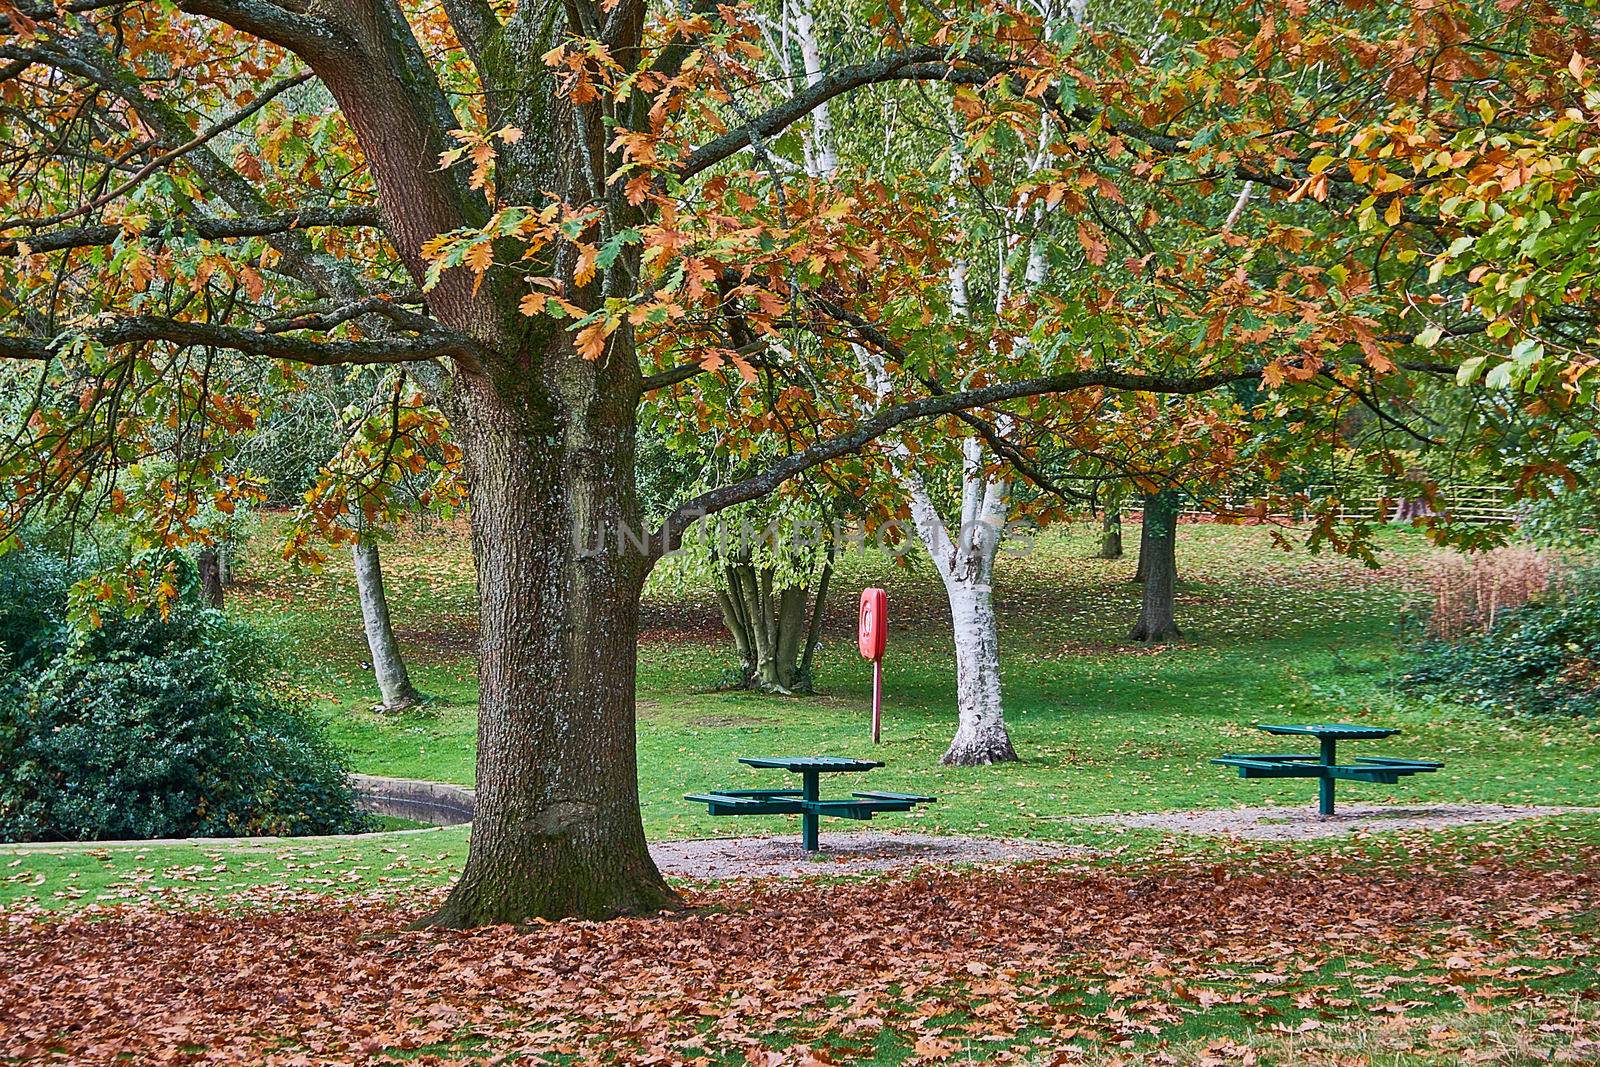 Autumn in Grove Park, a public park in Birmingham